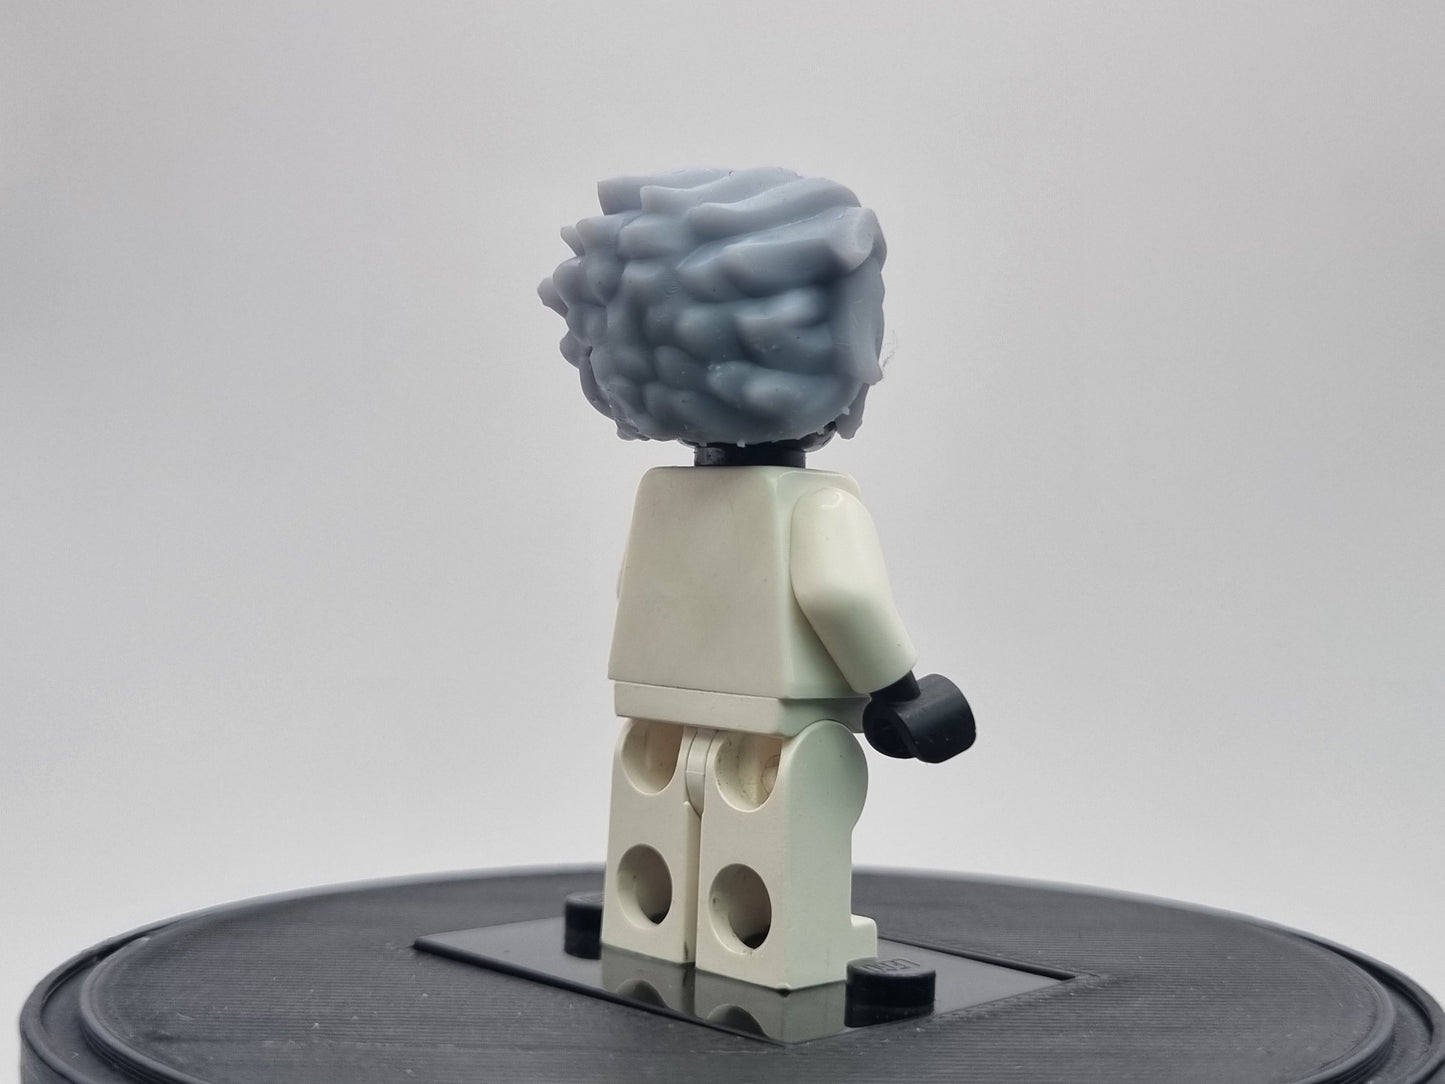 Building toy custom 3D printed mad girl hair!